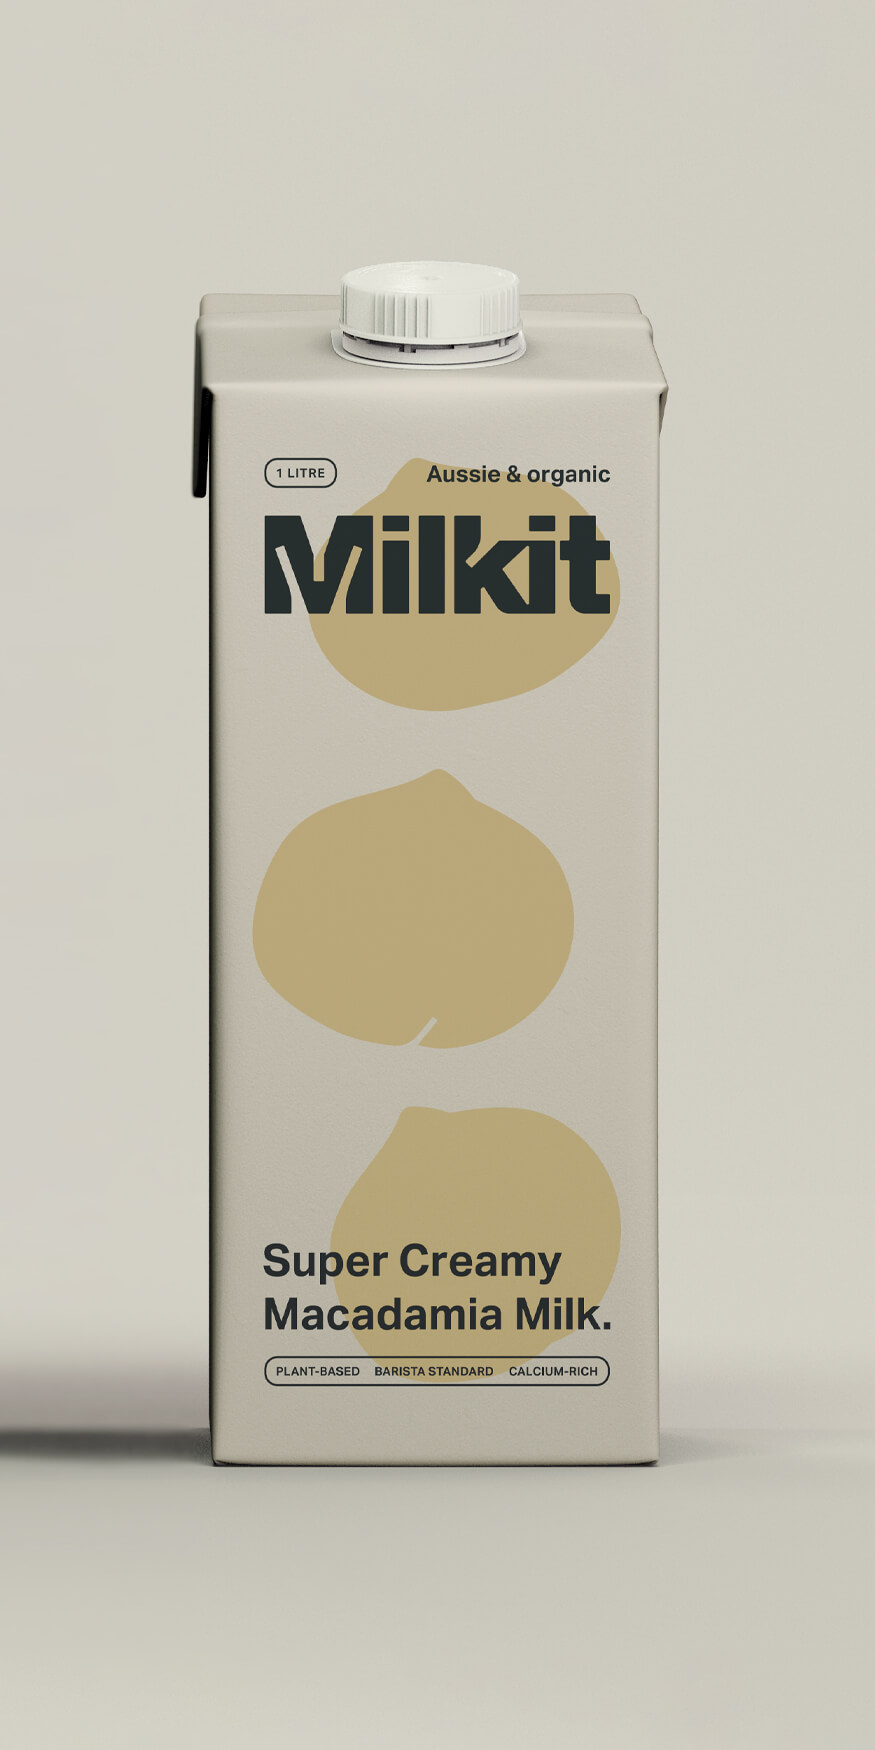 Packaging design for a carton of Milkit Macadamia Milk featuring minimal macadamia brand illustration.